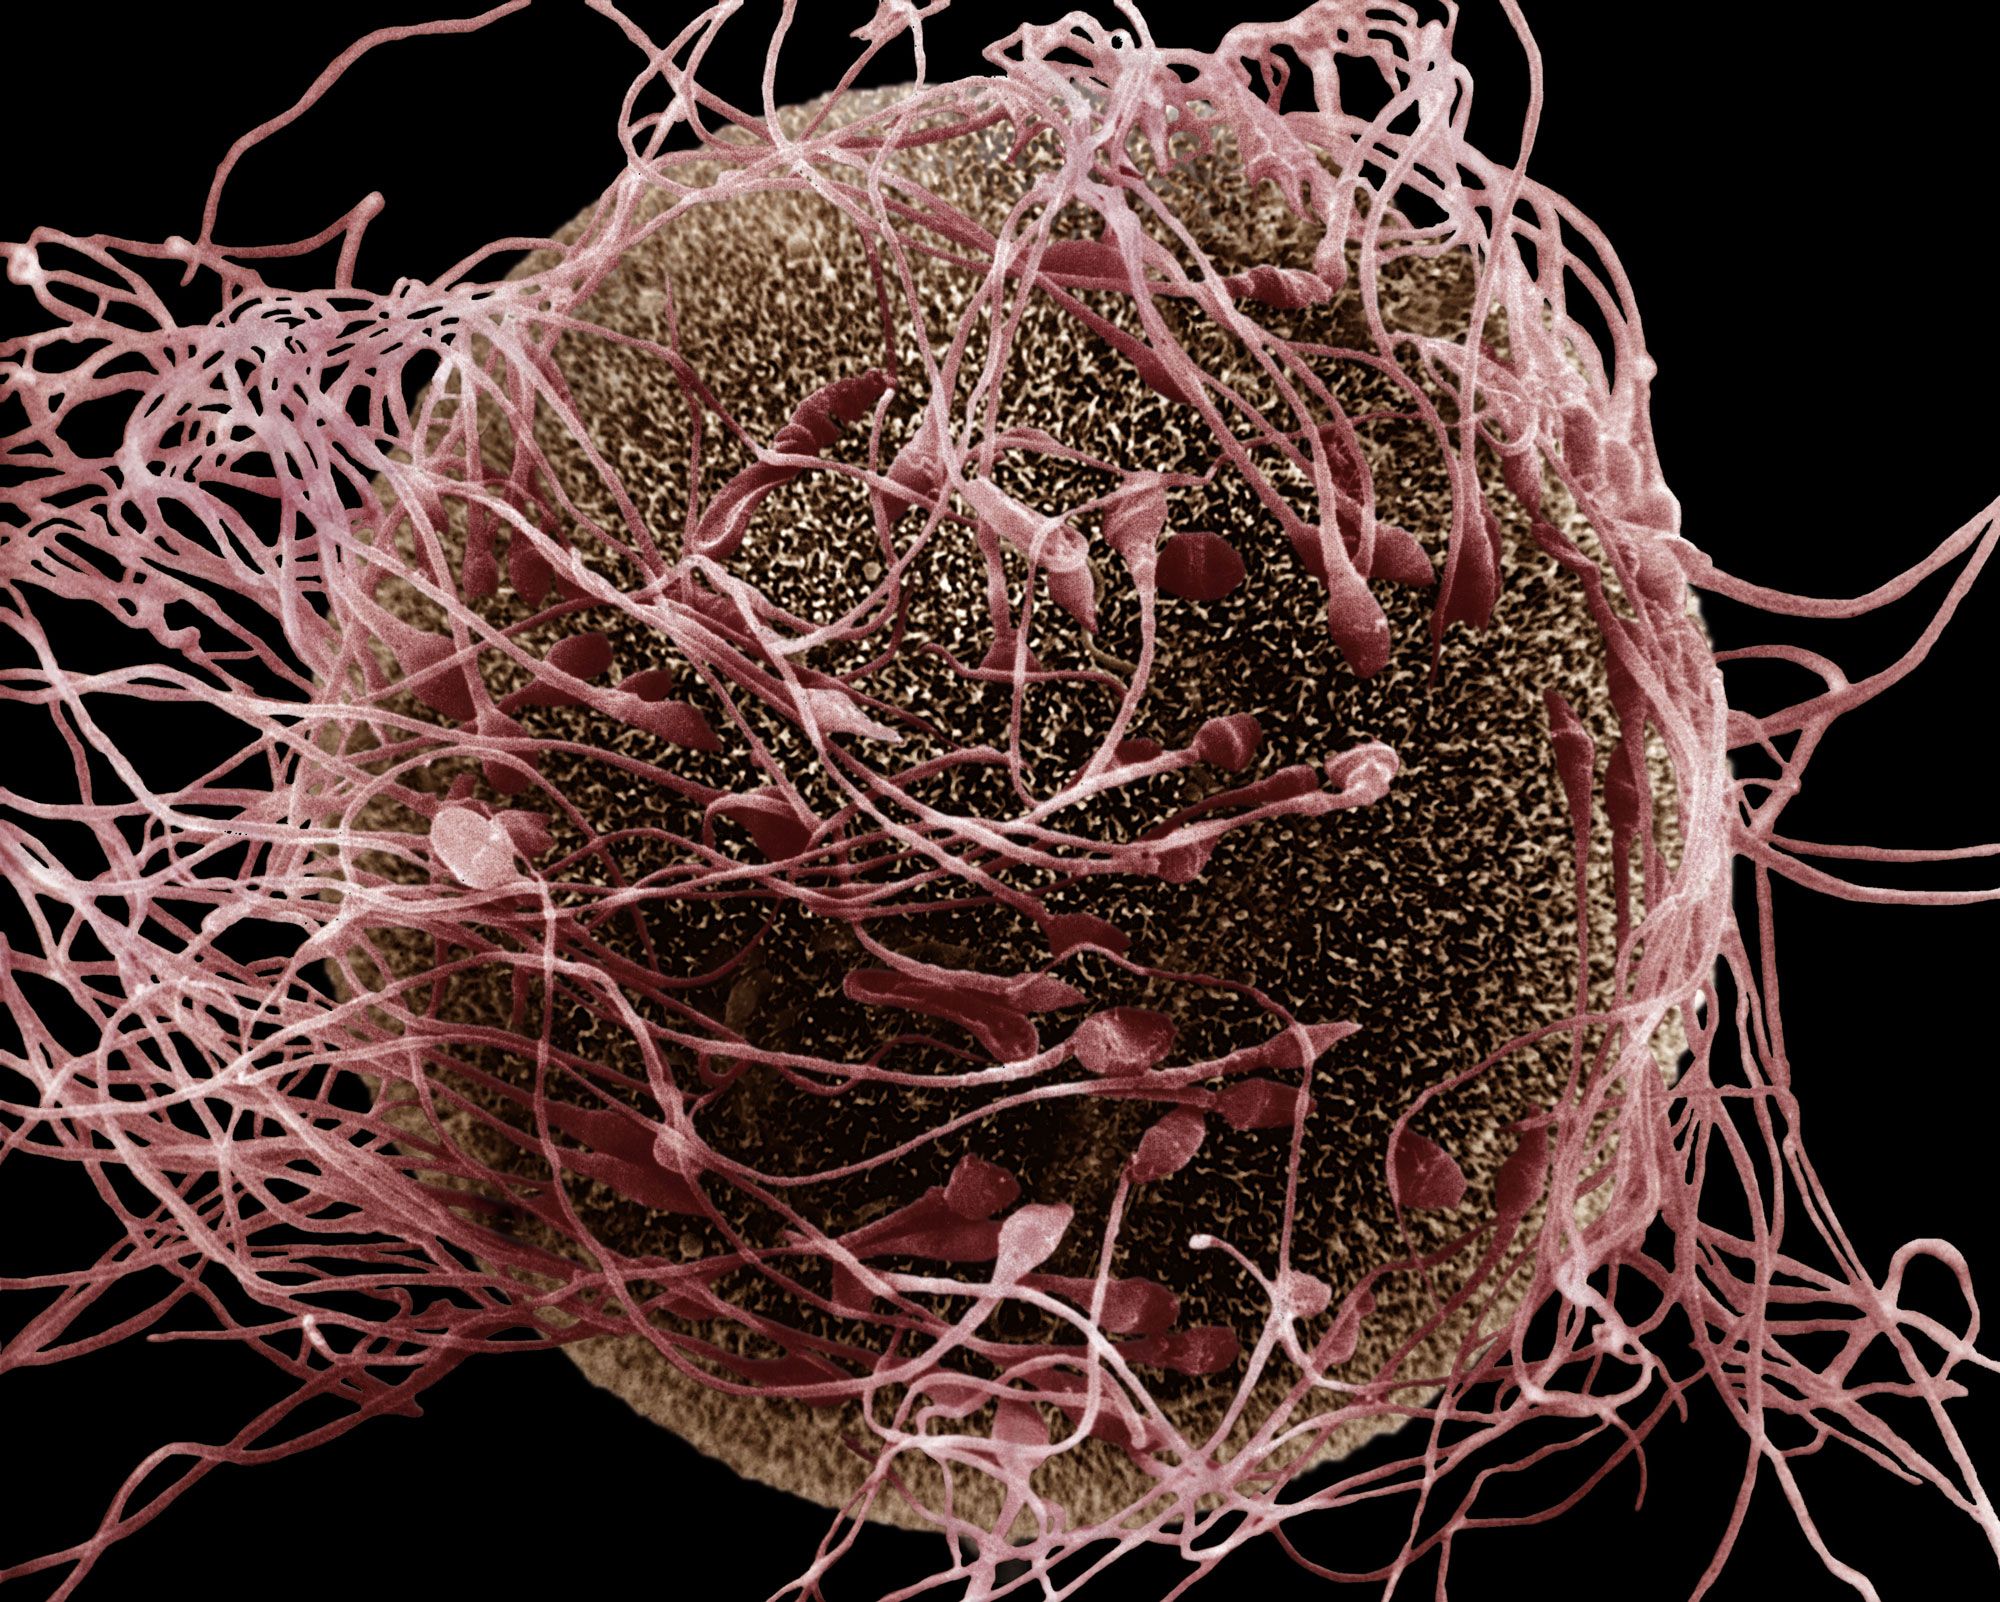 Micrographs of sperm